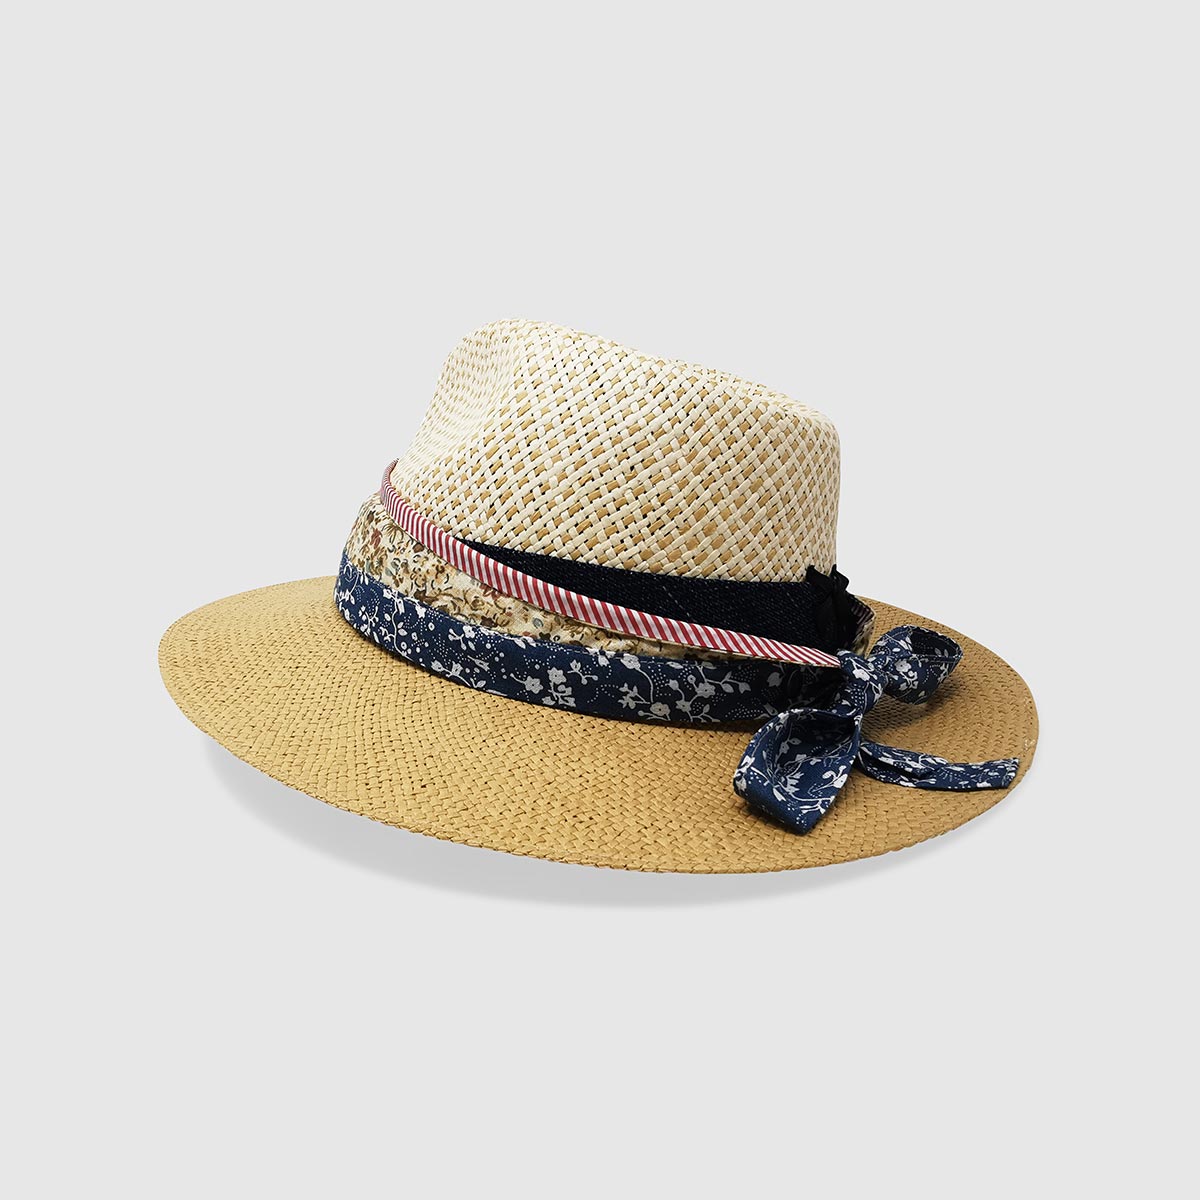 Bicolor Papier Hat with Denim belt and Obi band Doria 1905 on sale 2022